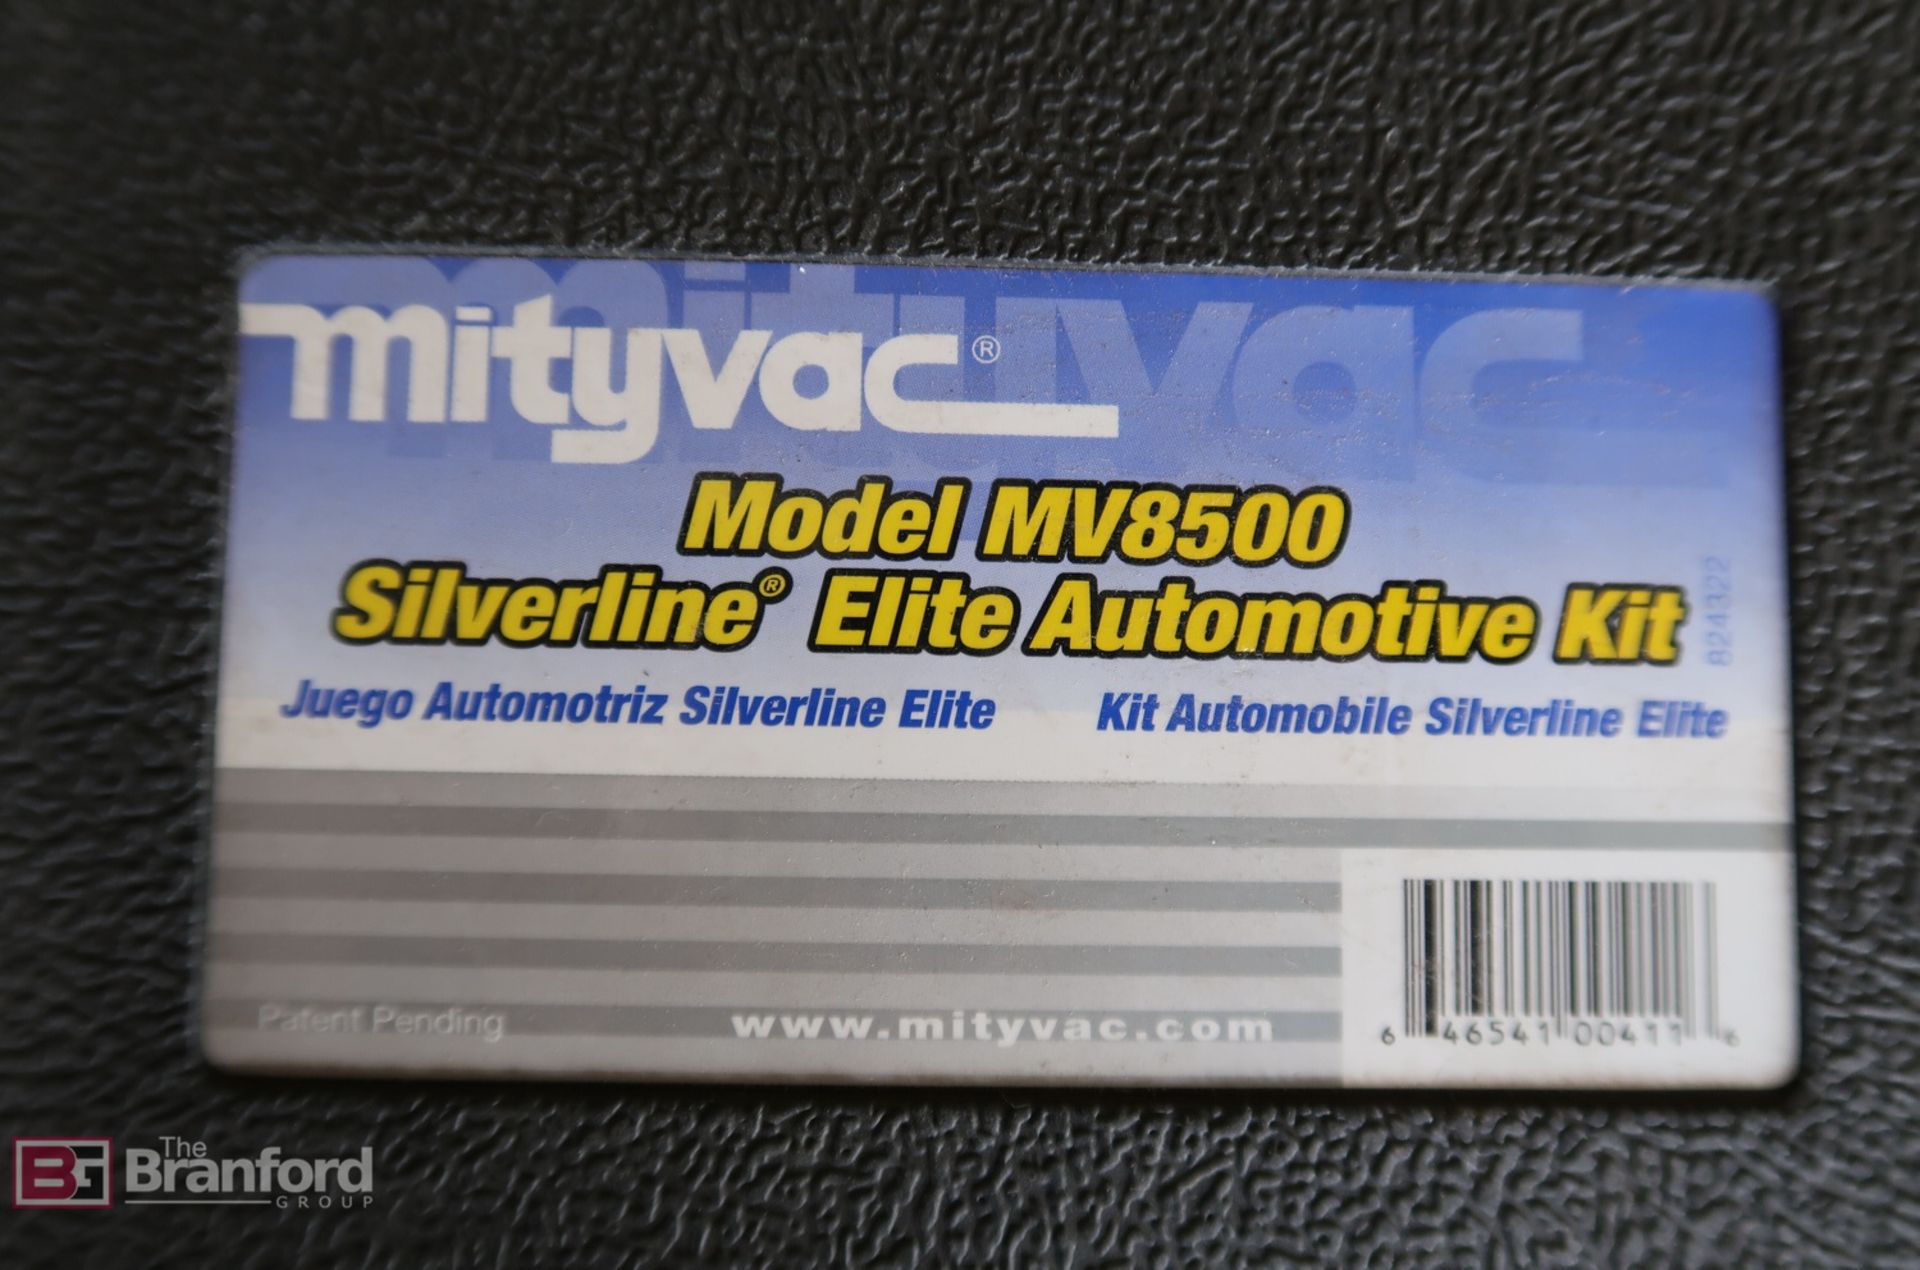 Mityvac Silverline Elite Automotive Kit, Model MV8500 - Image 2 of 2